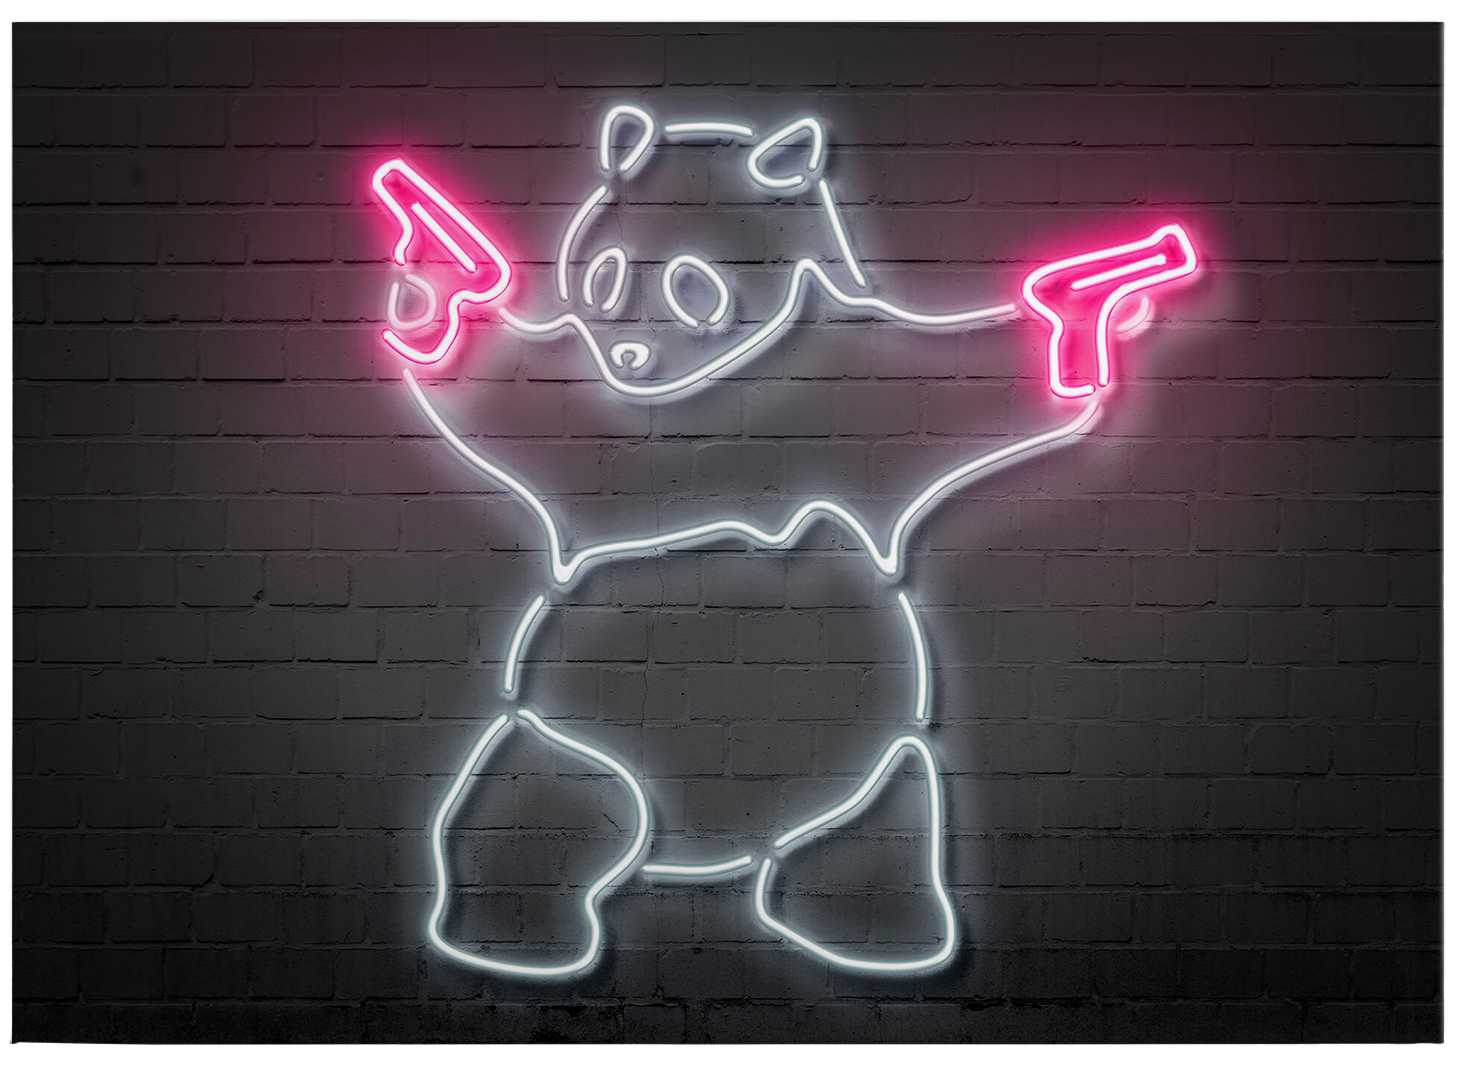             Leinwandbild Neonschild "Panda" von Mielu – 0,70 m x 0,50 m
        